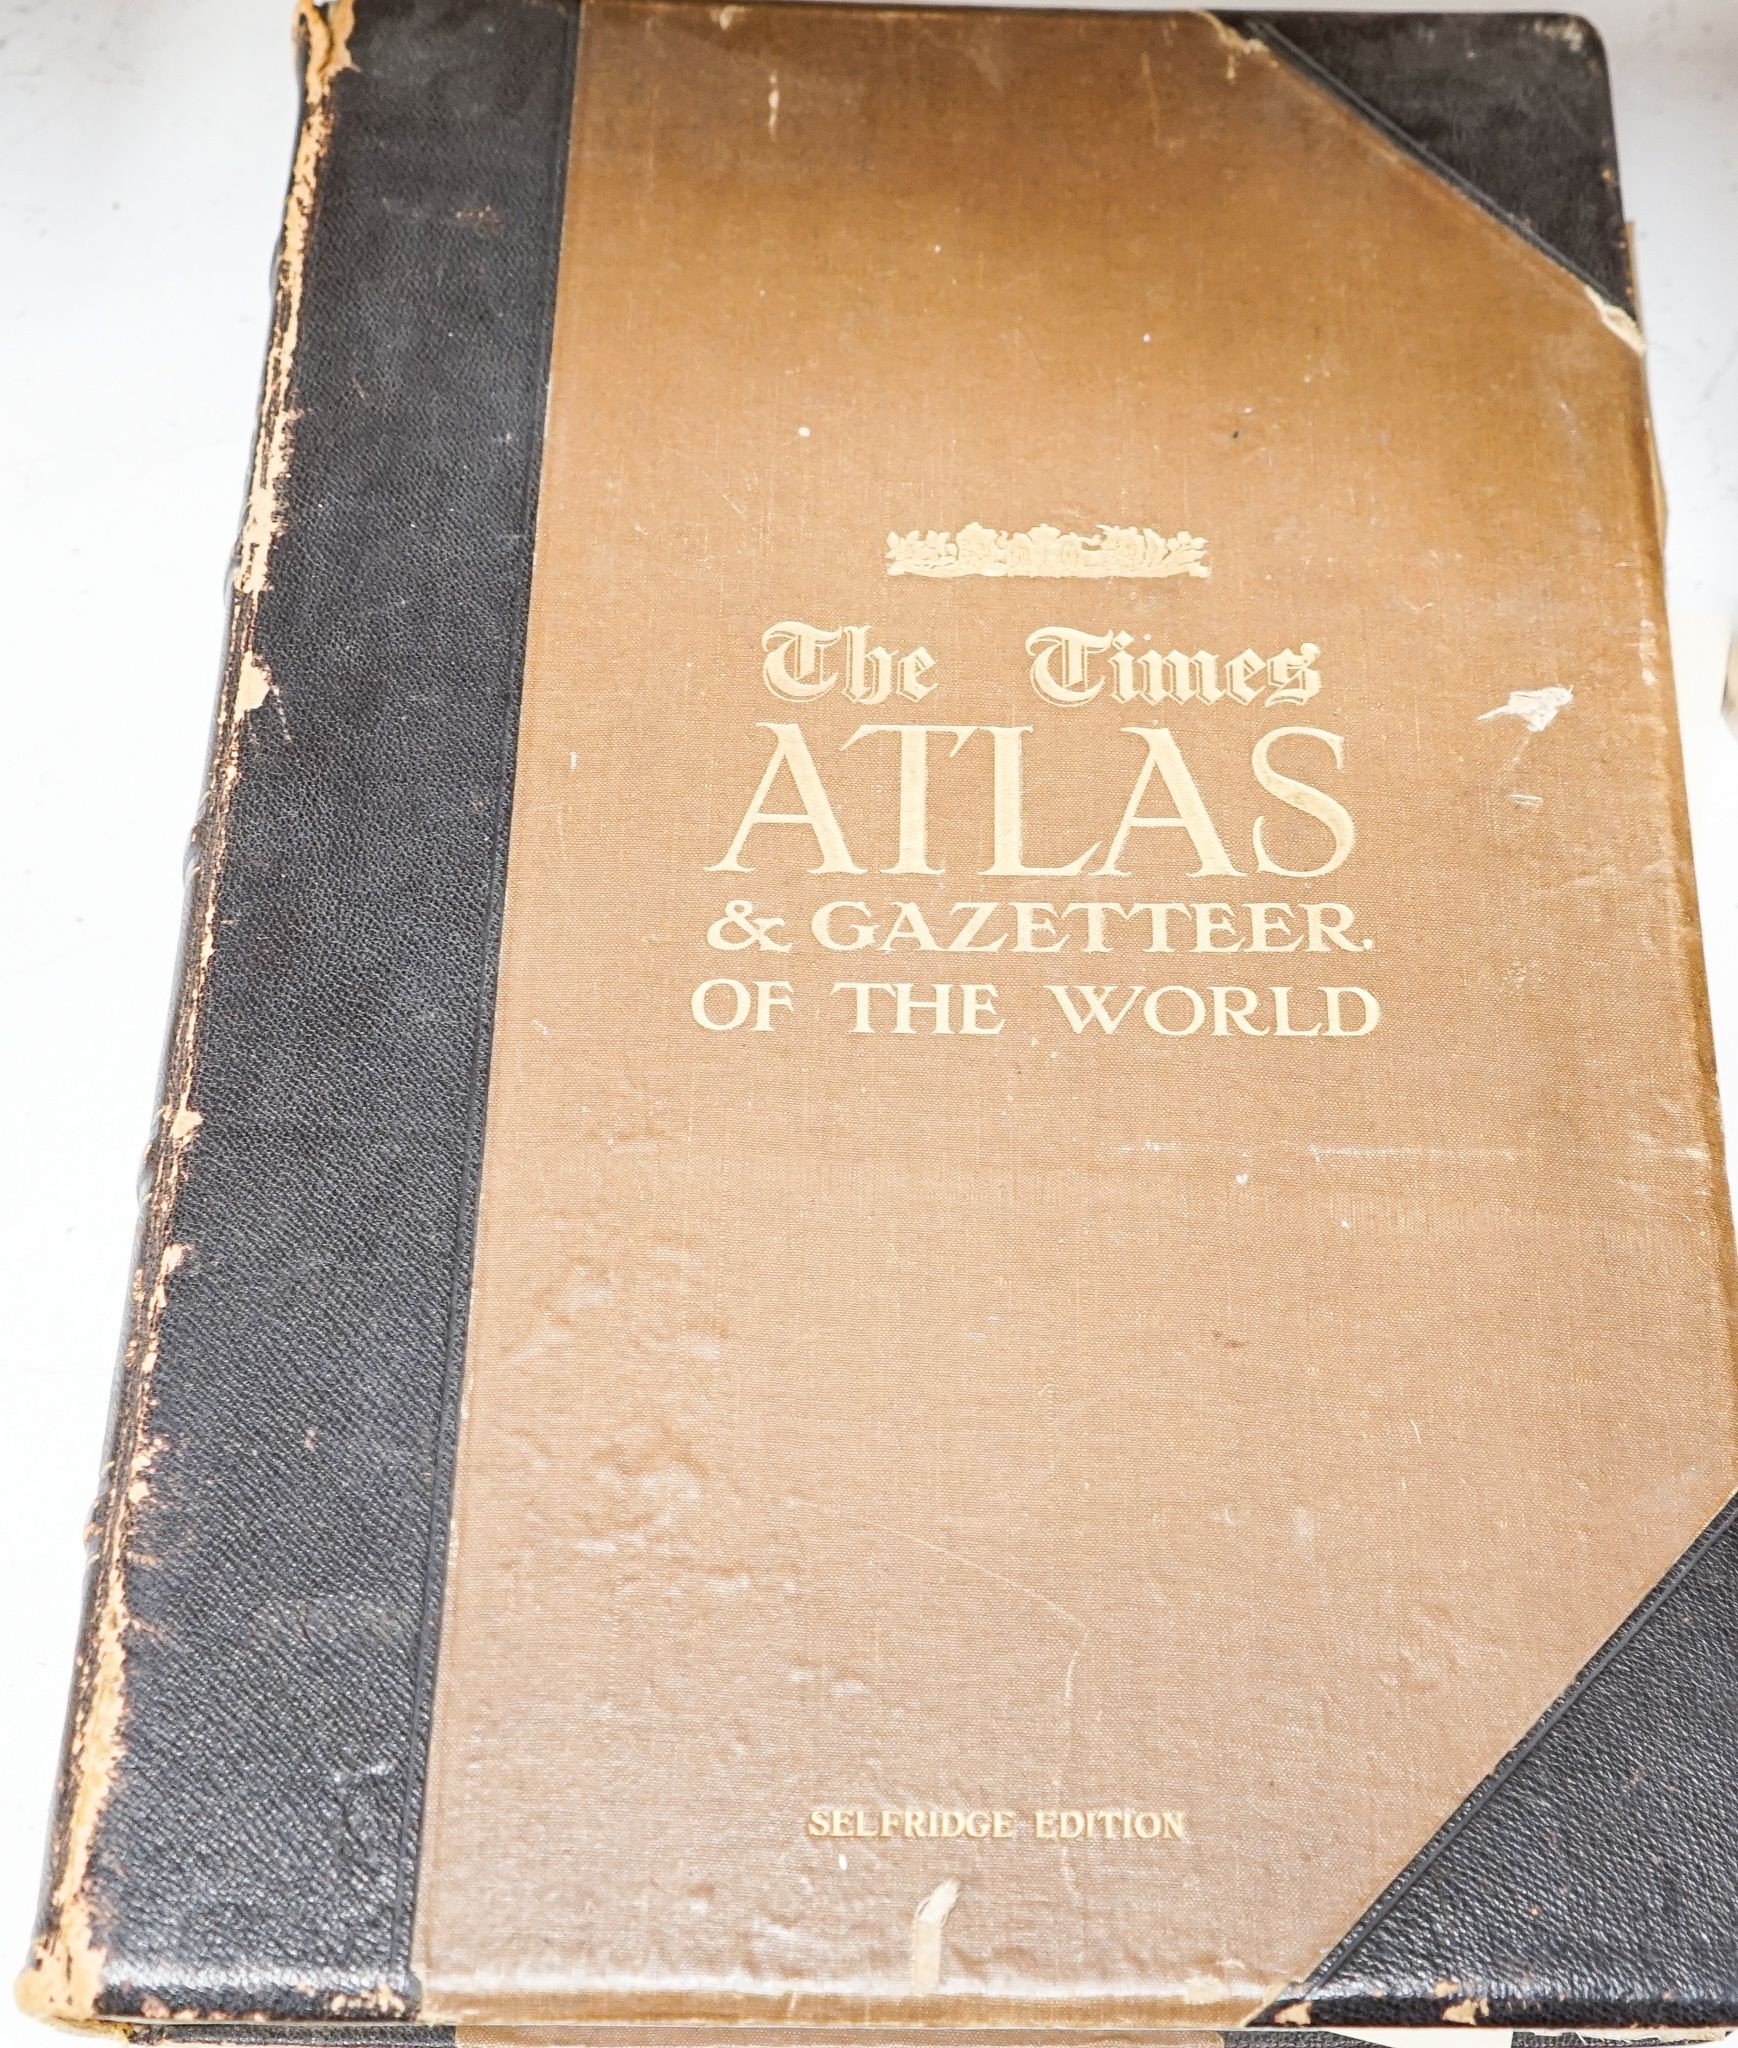 The Times bound atlas, 1921, half calf